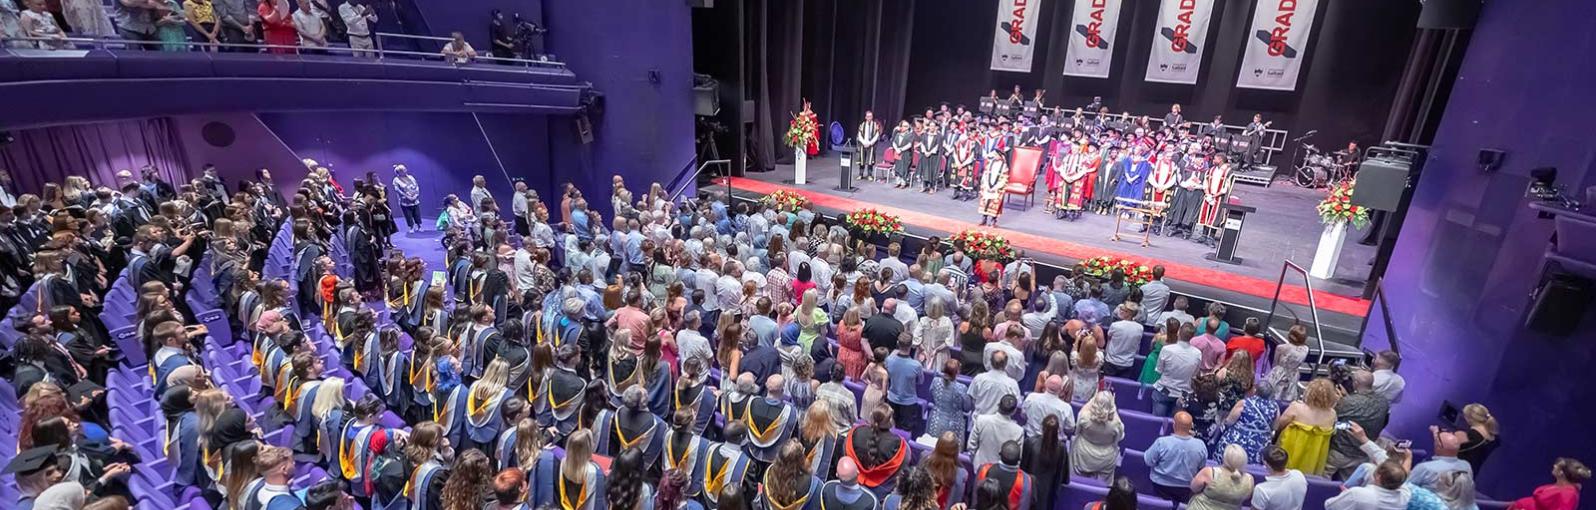 Graduation ceremony inside the Lowry Theatre